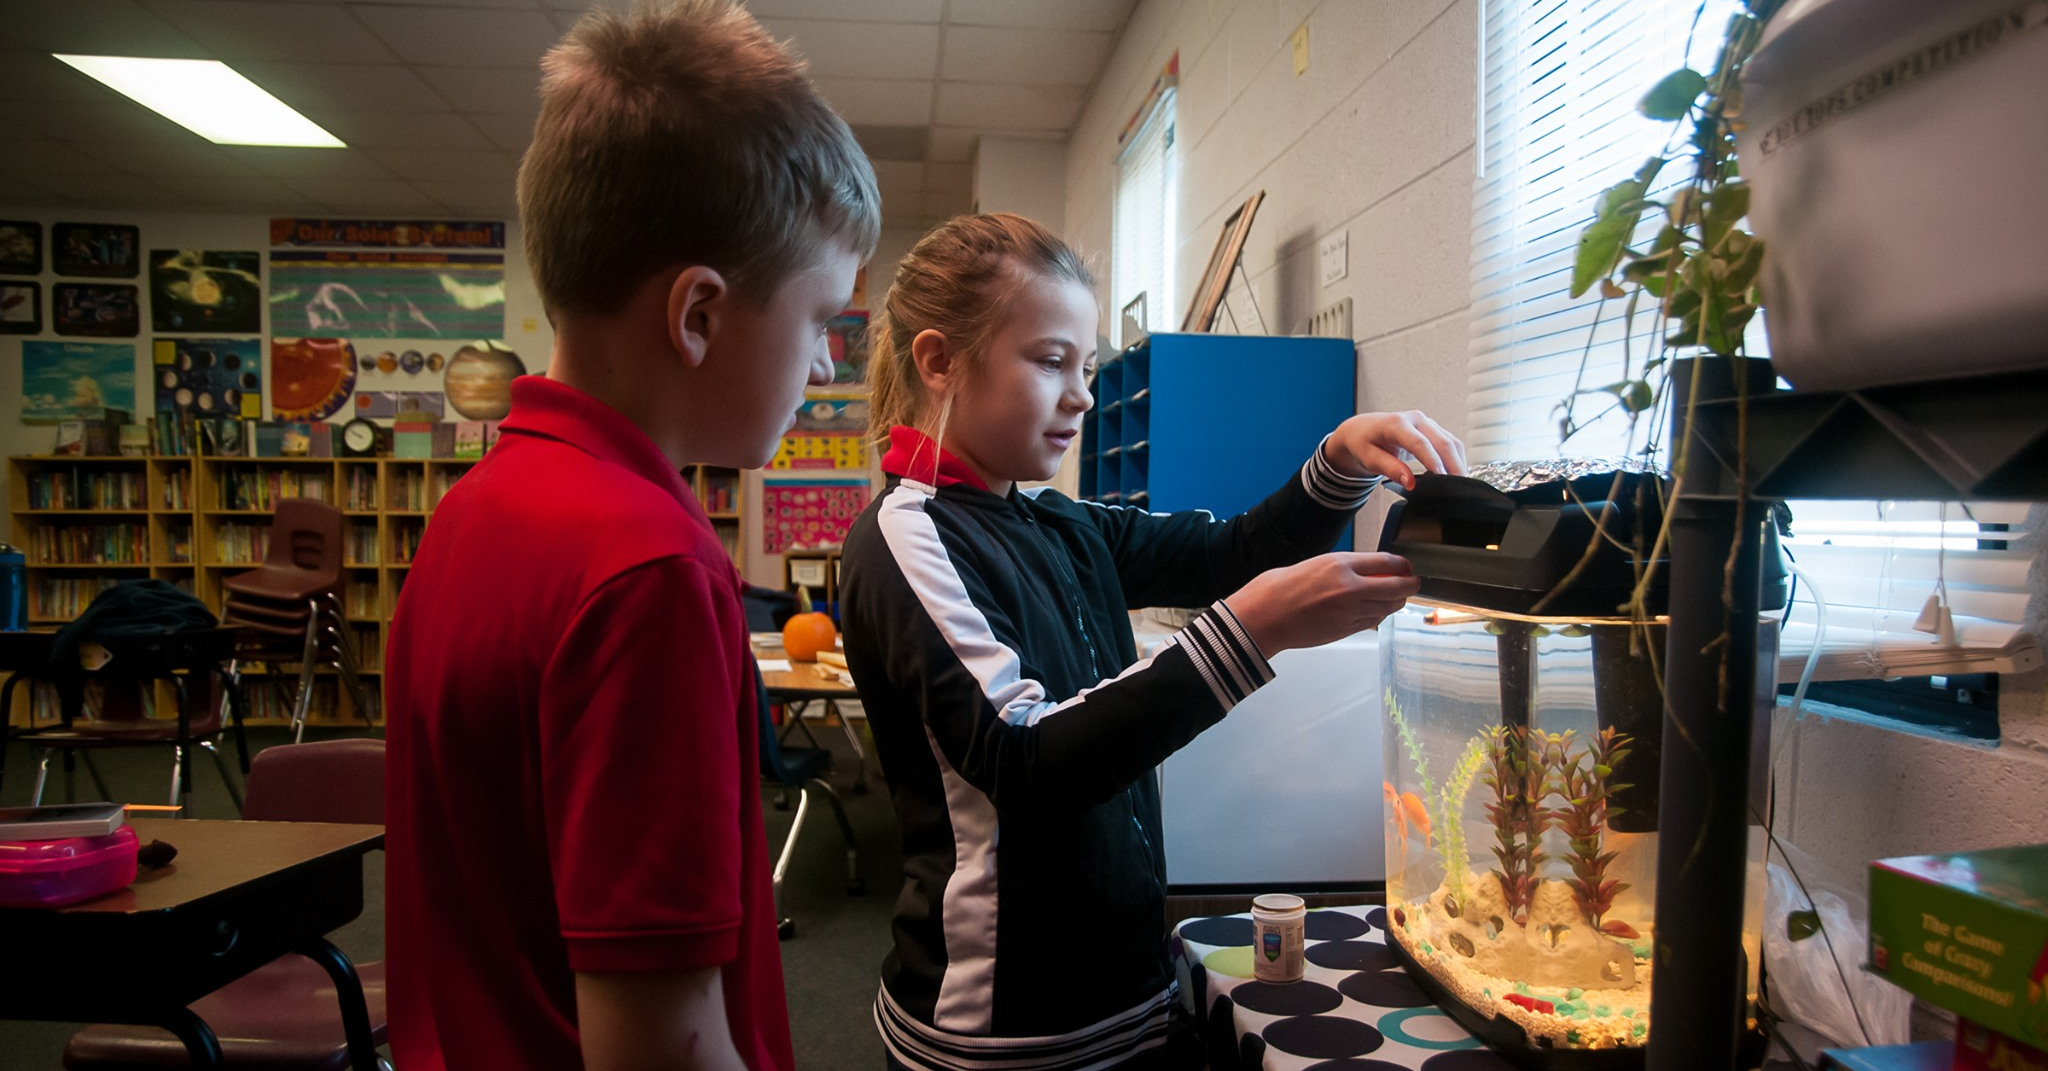 students feeding fish in classroom